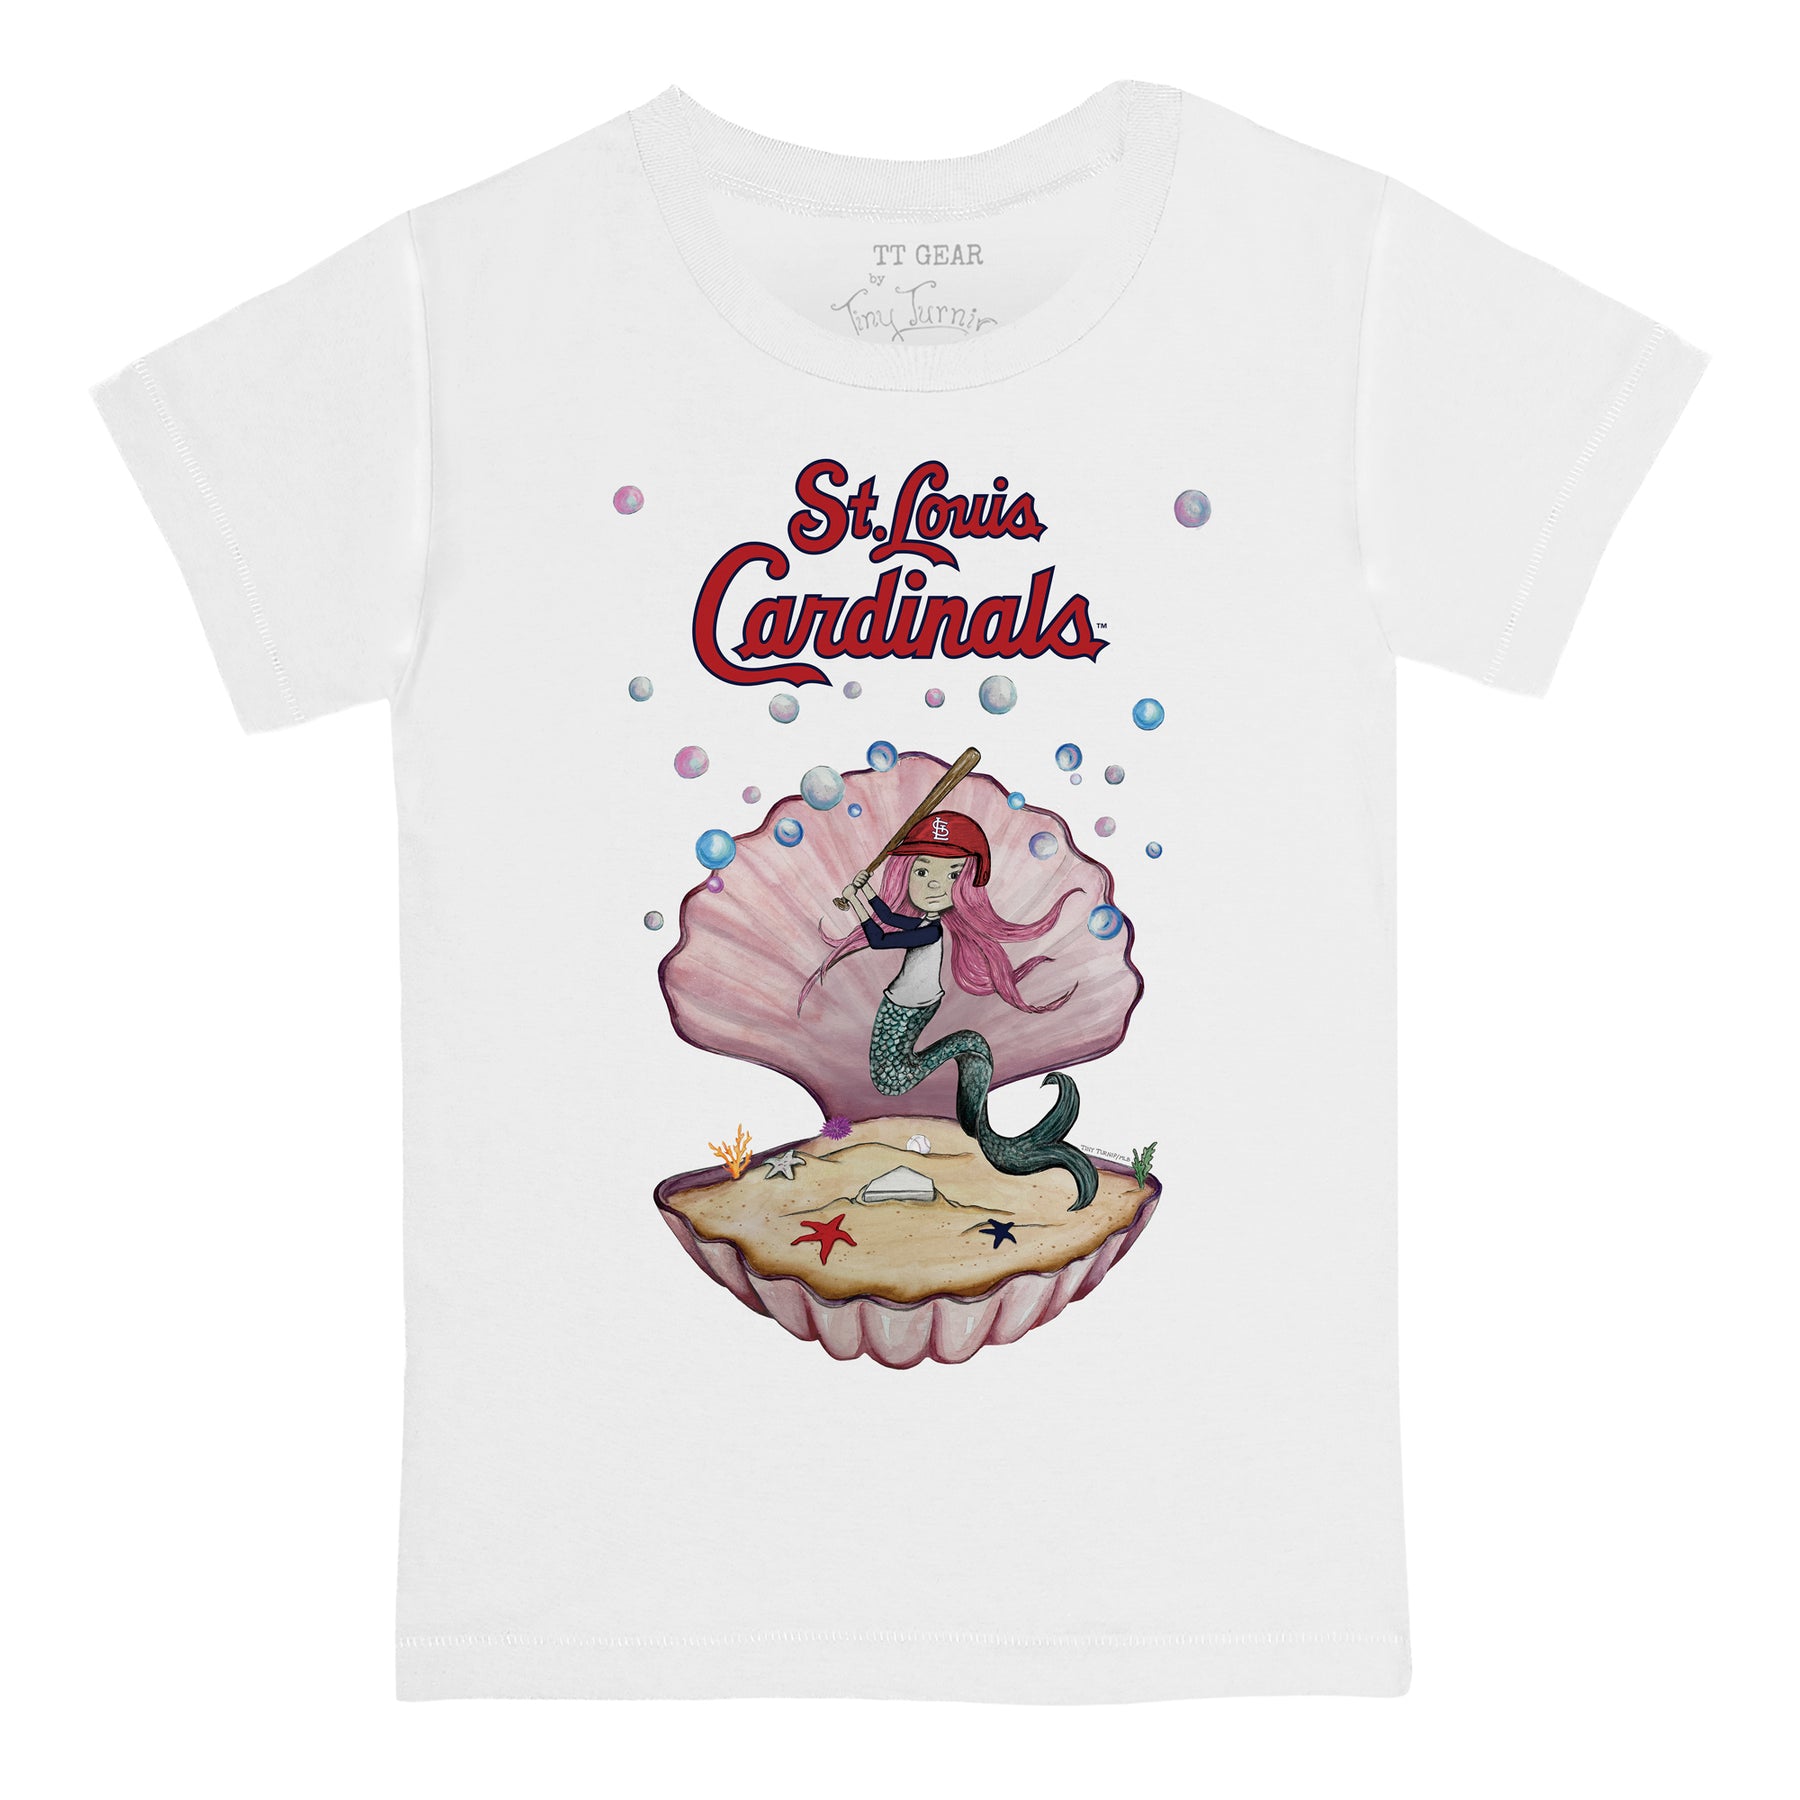 St. Louis Cardinals Mermaid Tee Shirt